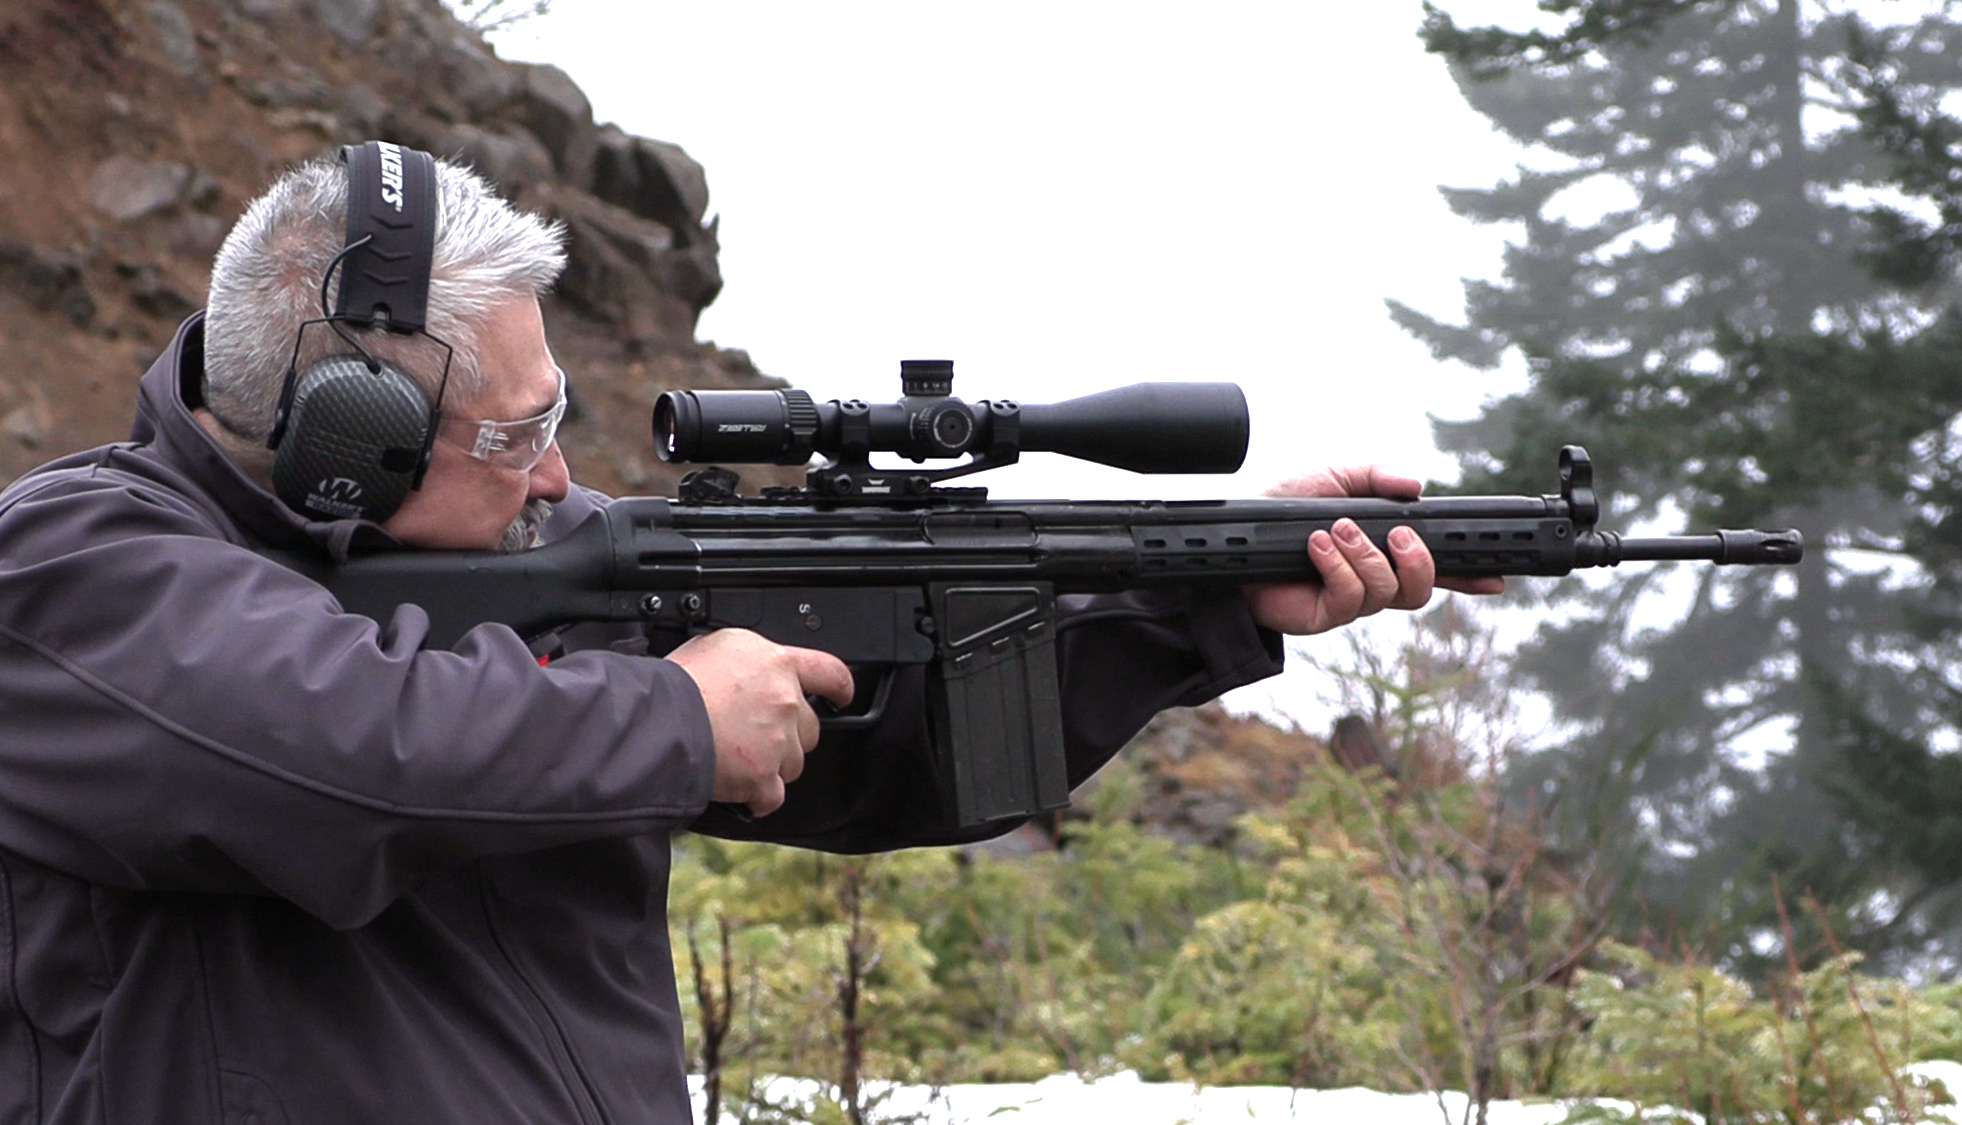 hk mp5 22lr scope snipe